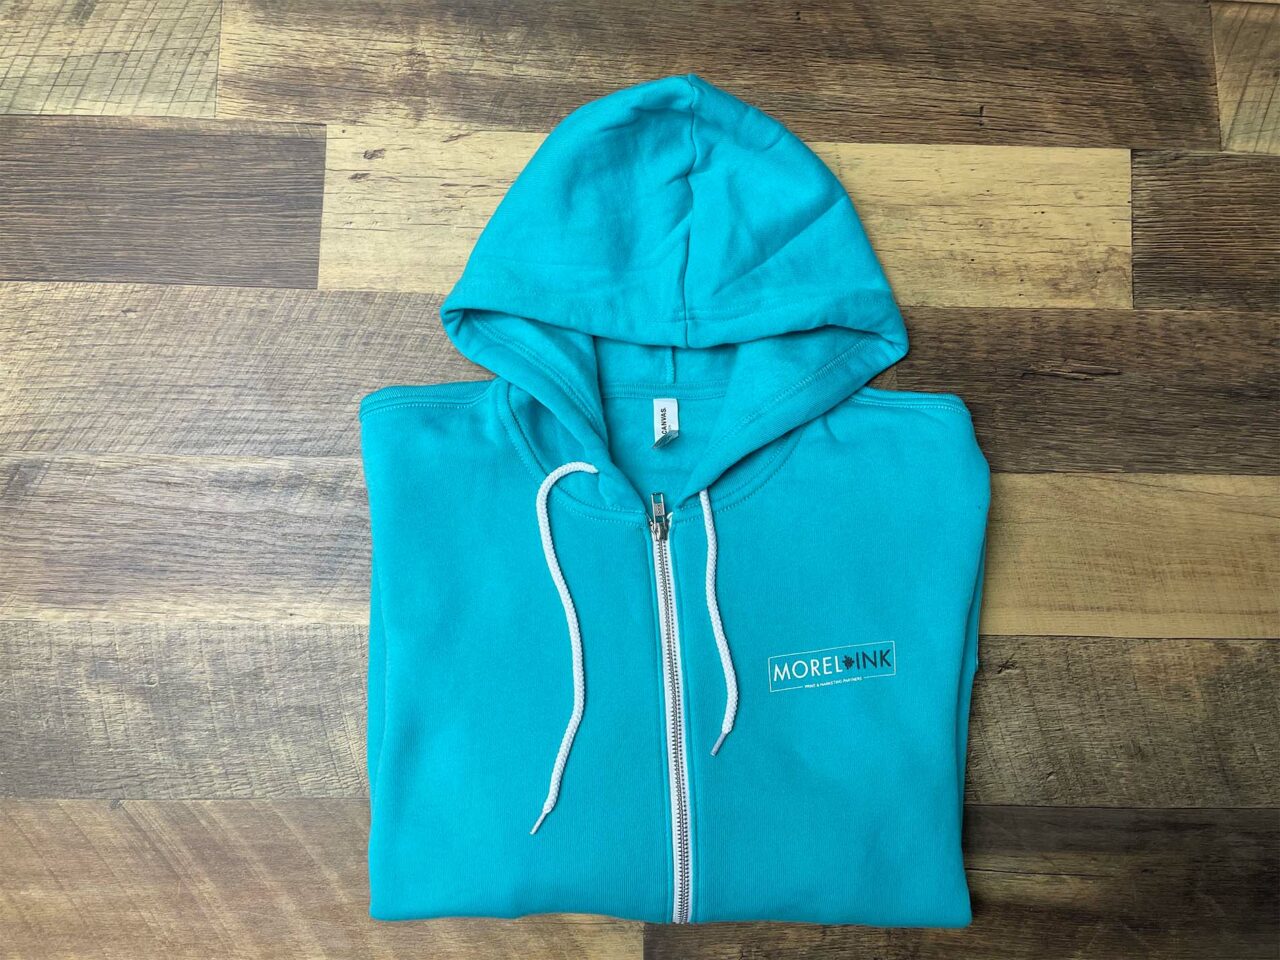 Example of Morel's apparel capabilities, showing a custom branded zip-up hoodie